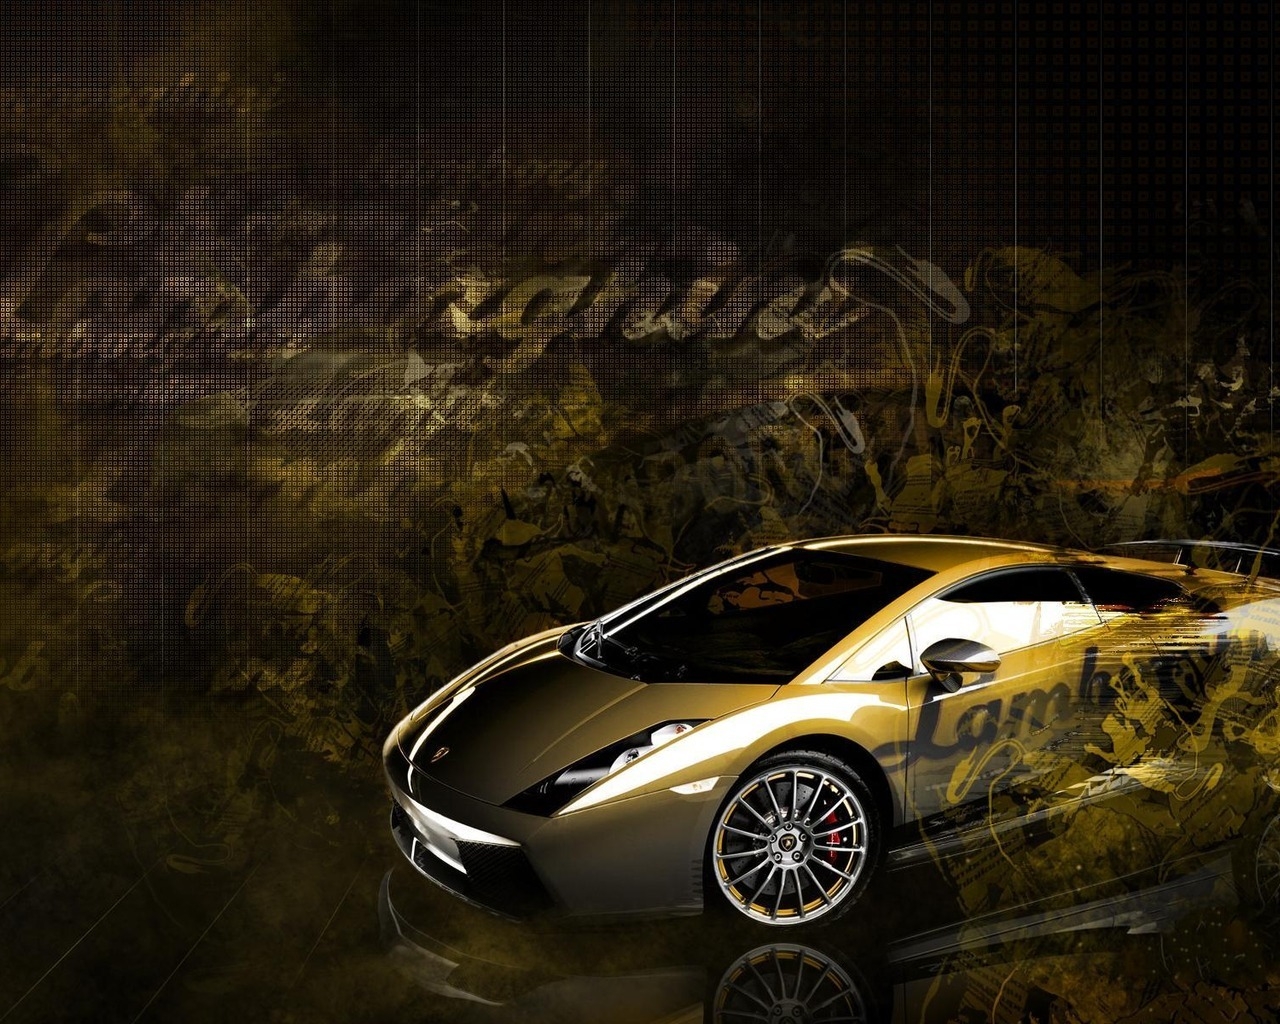 Lamborghini Gallardo for 1280 x 1024 resolution